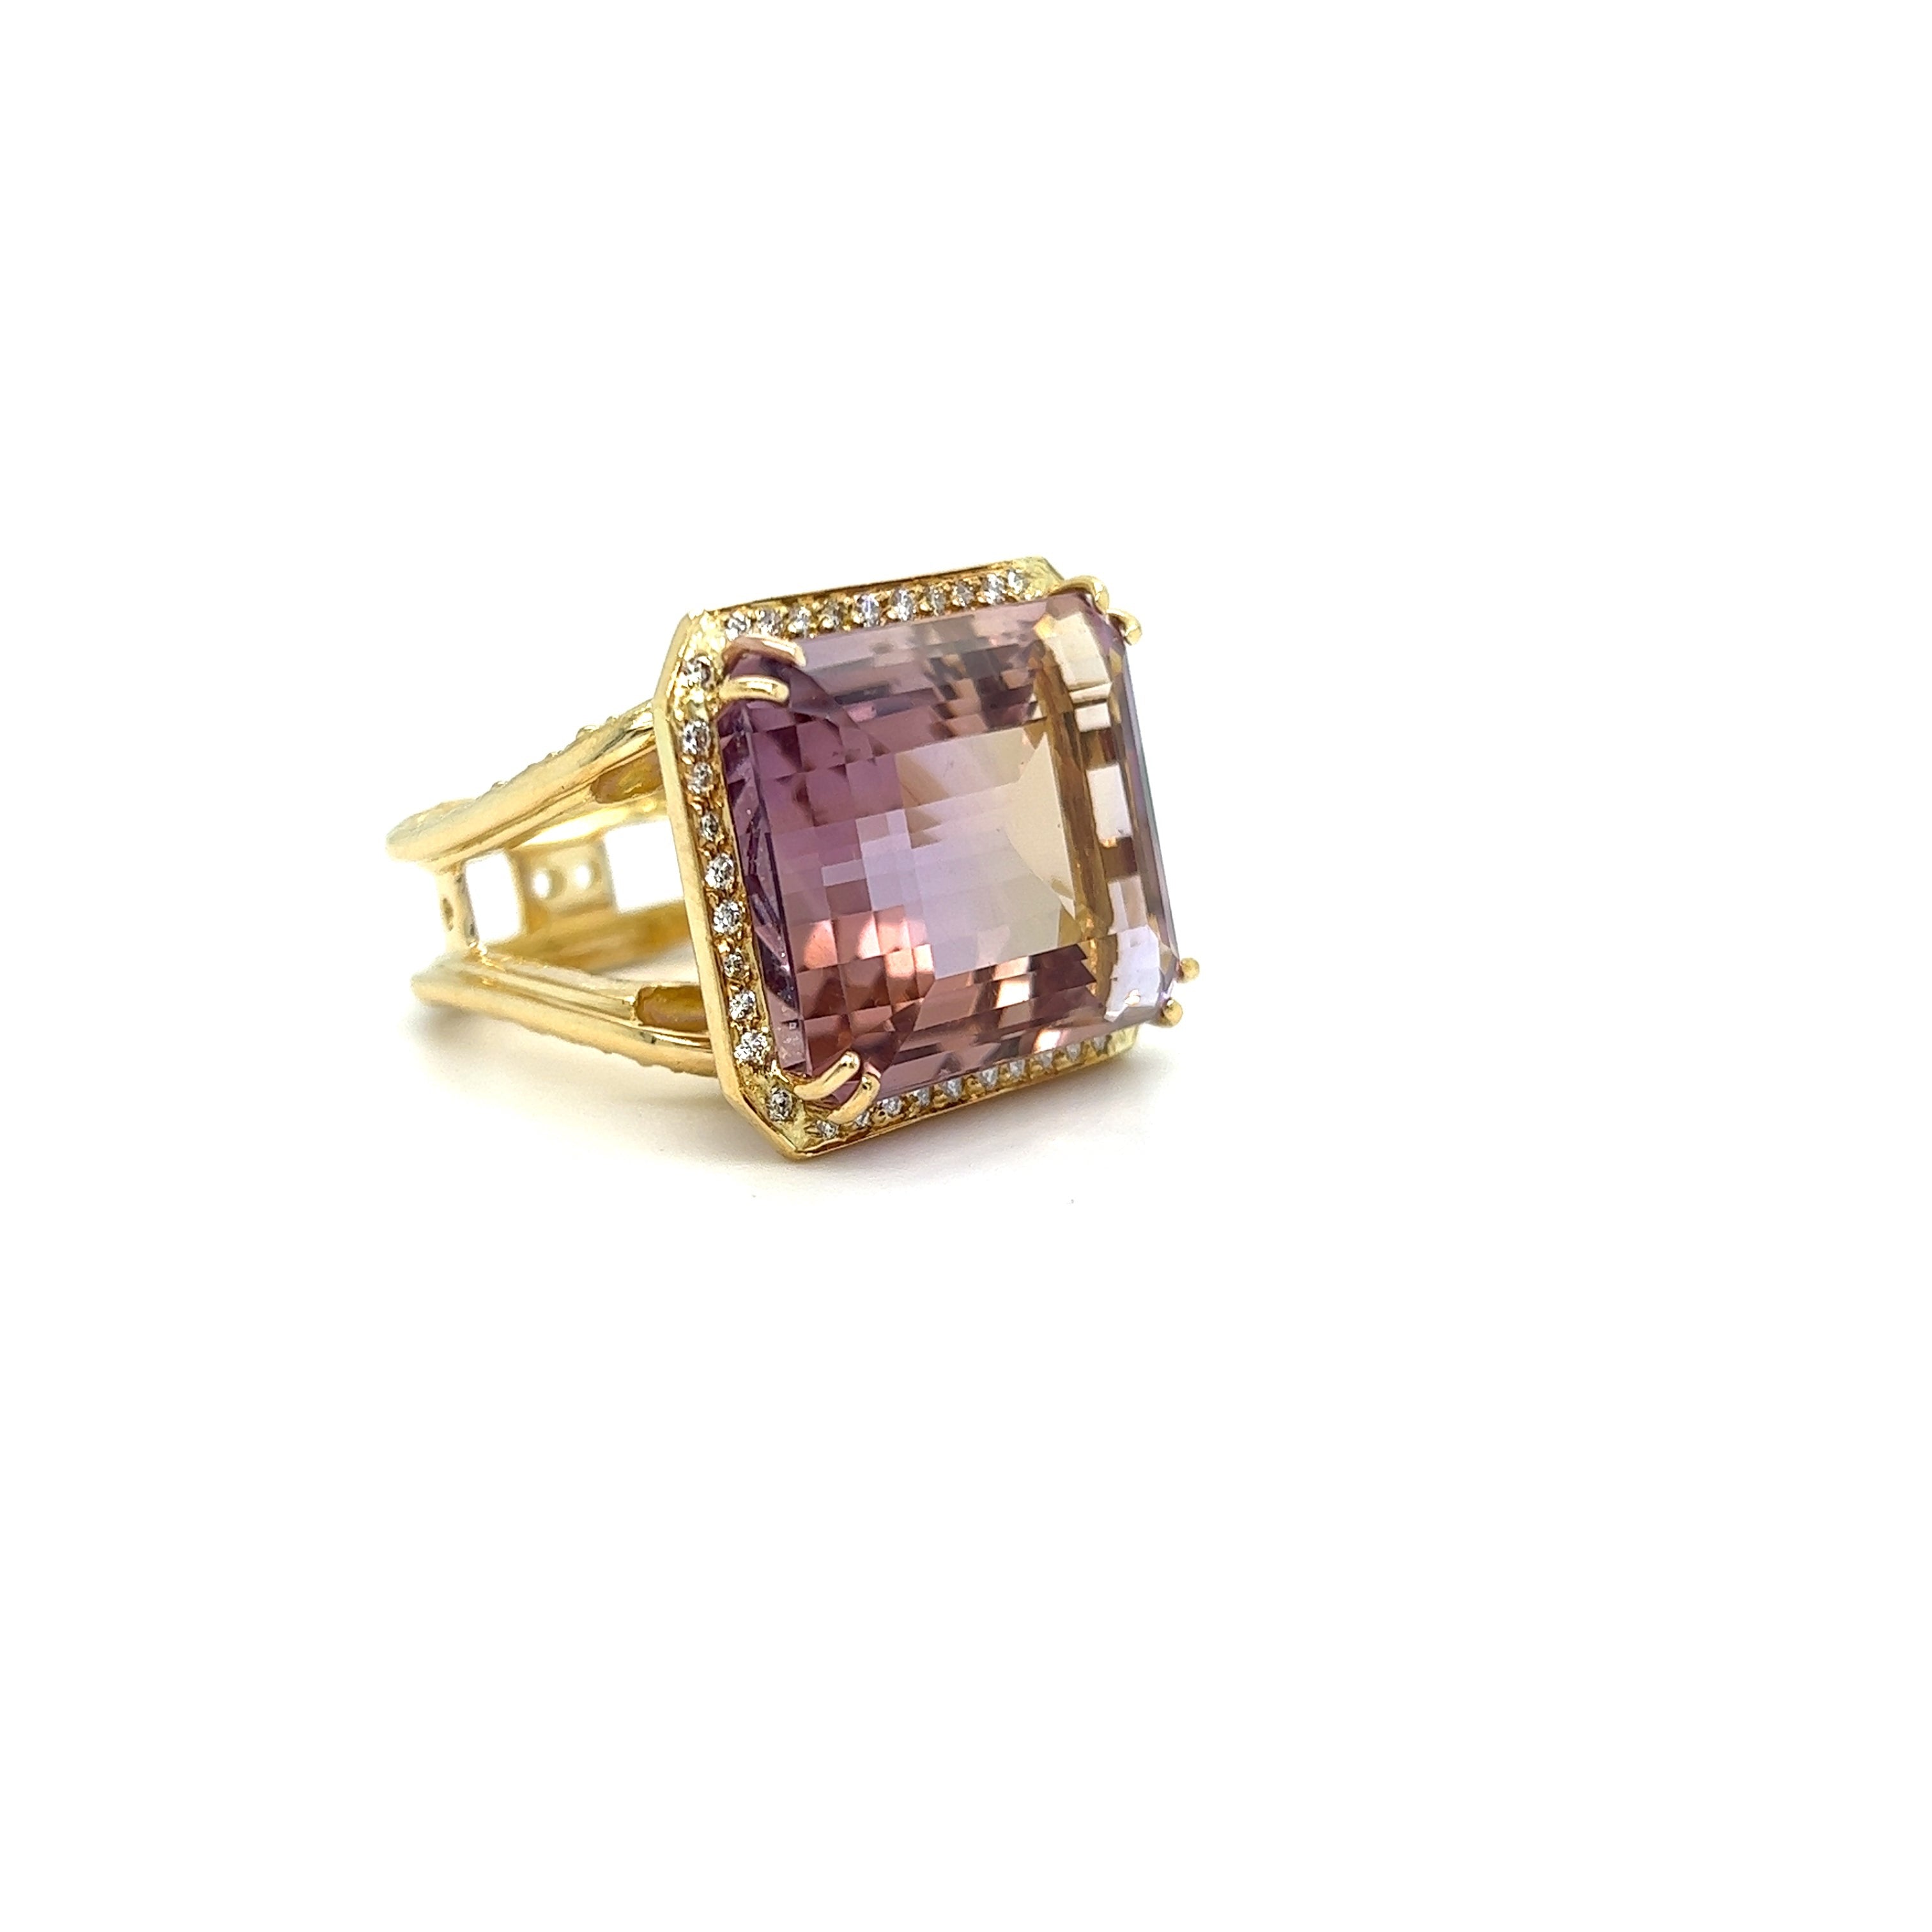 Yellow Gold 18k Diamond and Ametrine Ring | I&I Diamonds in Coconut Creek, FL